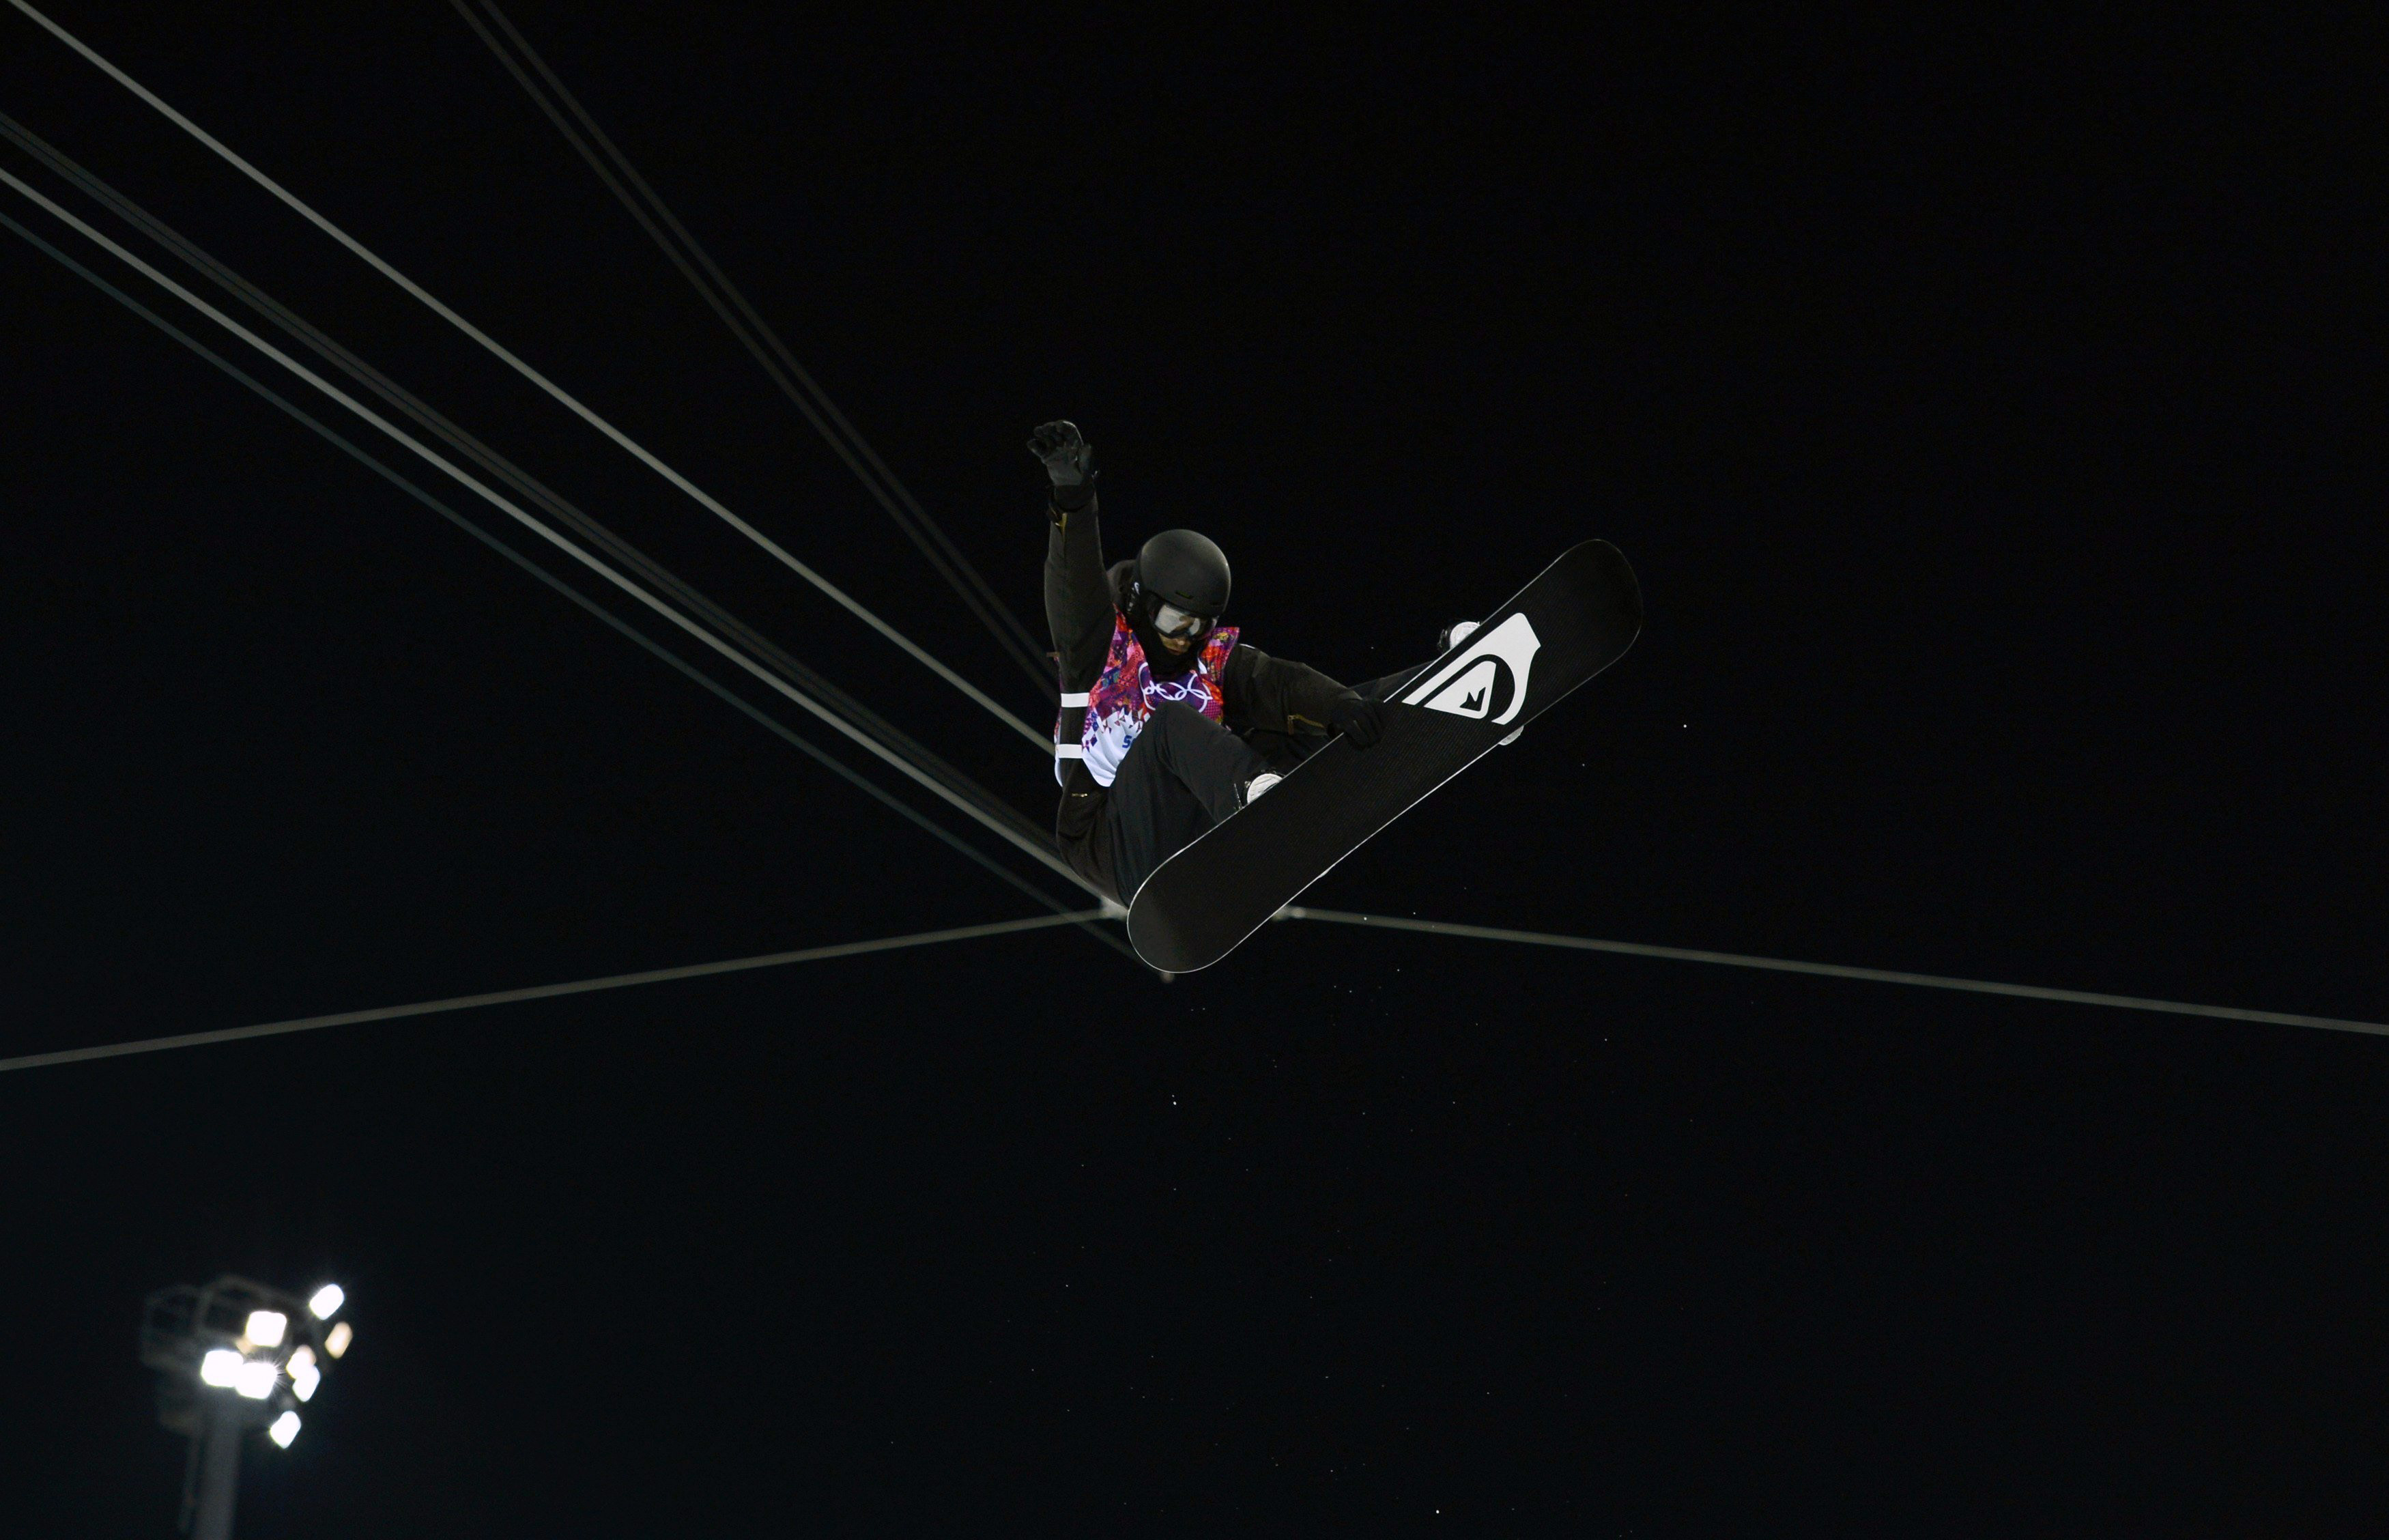 Switzerland's Iouri Podladtchikov performs a jump during the men's snowboard halfpipe semi-final even.